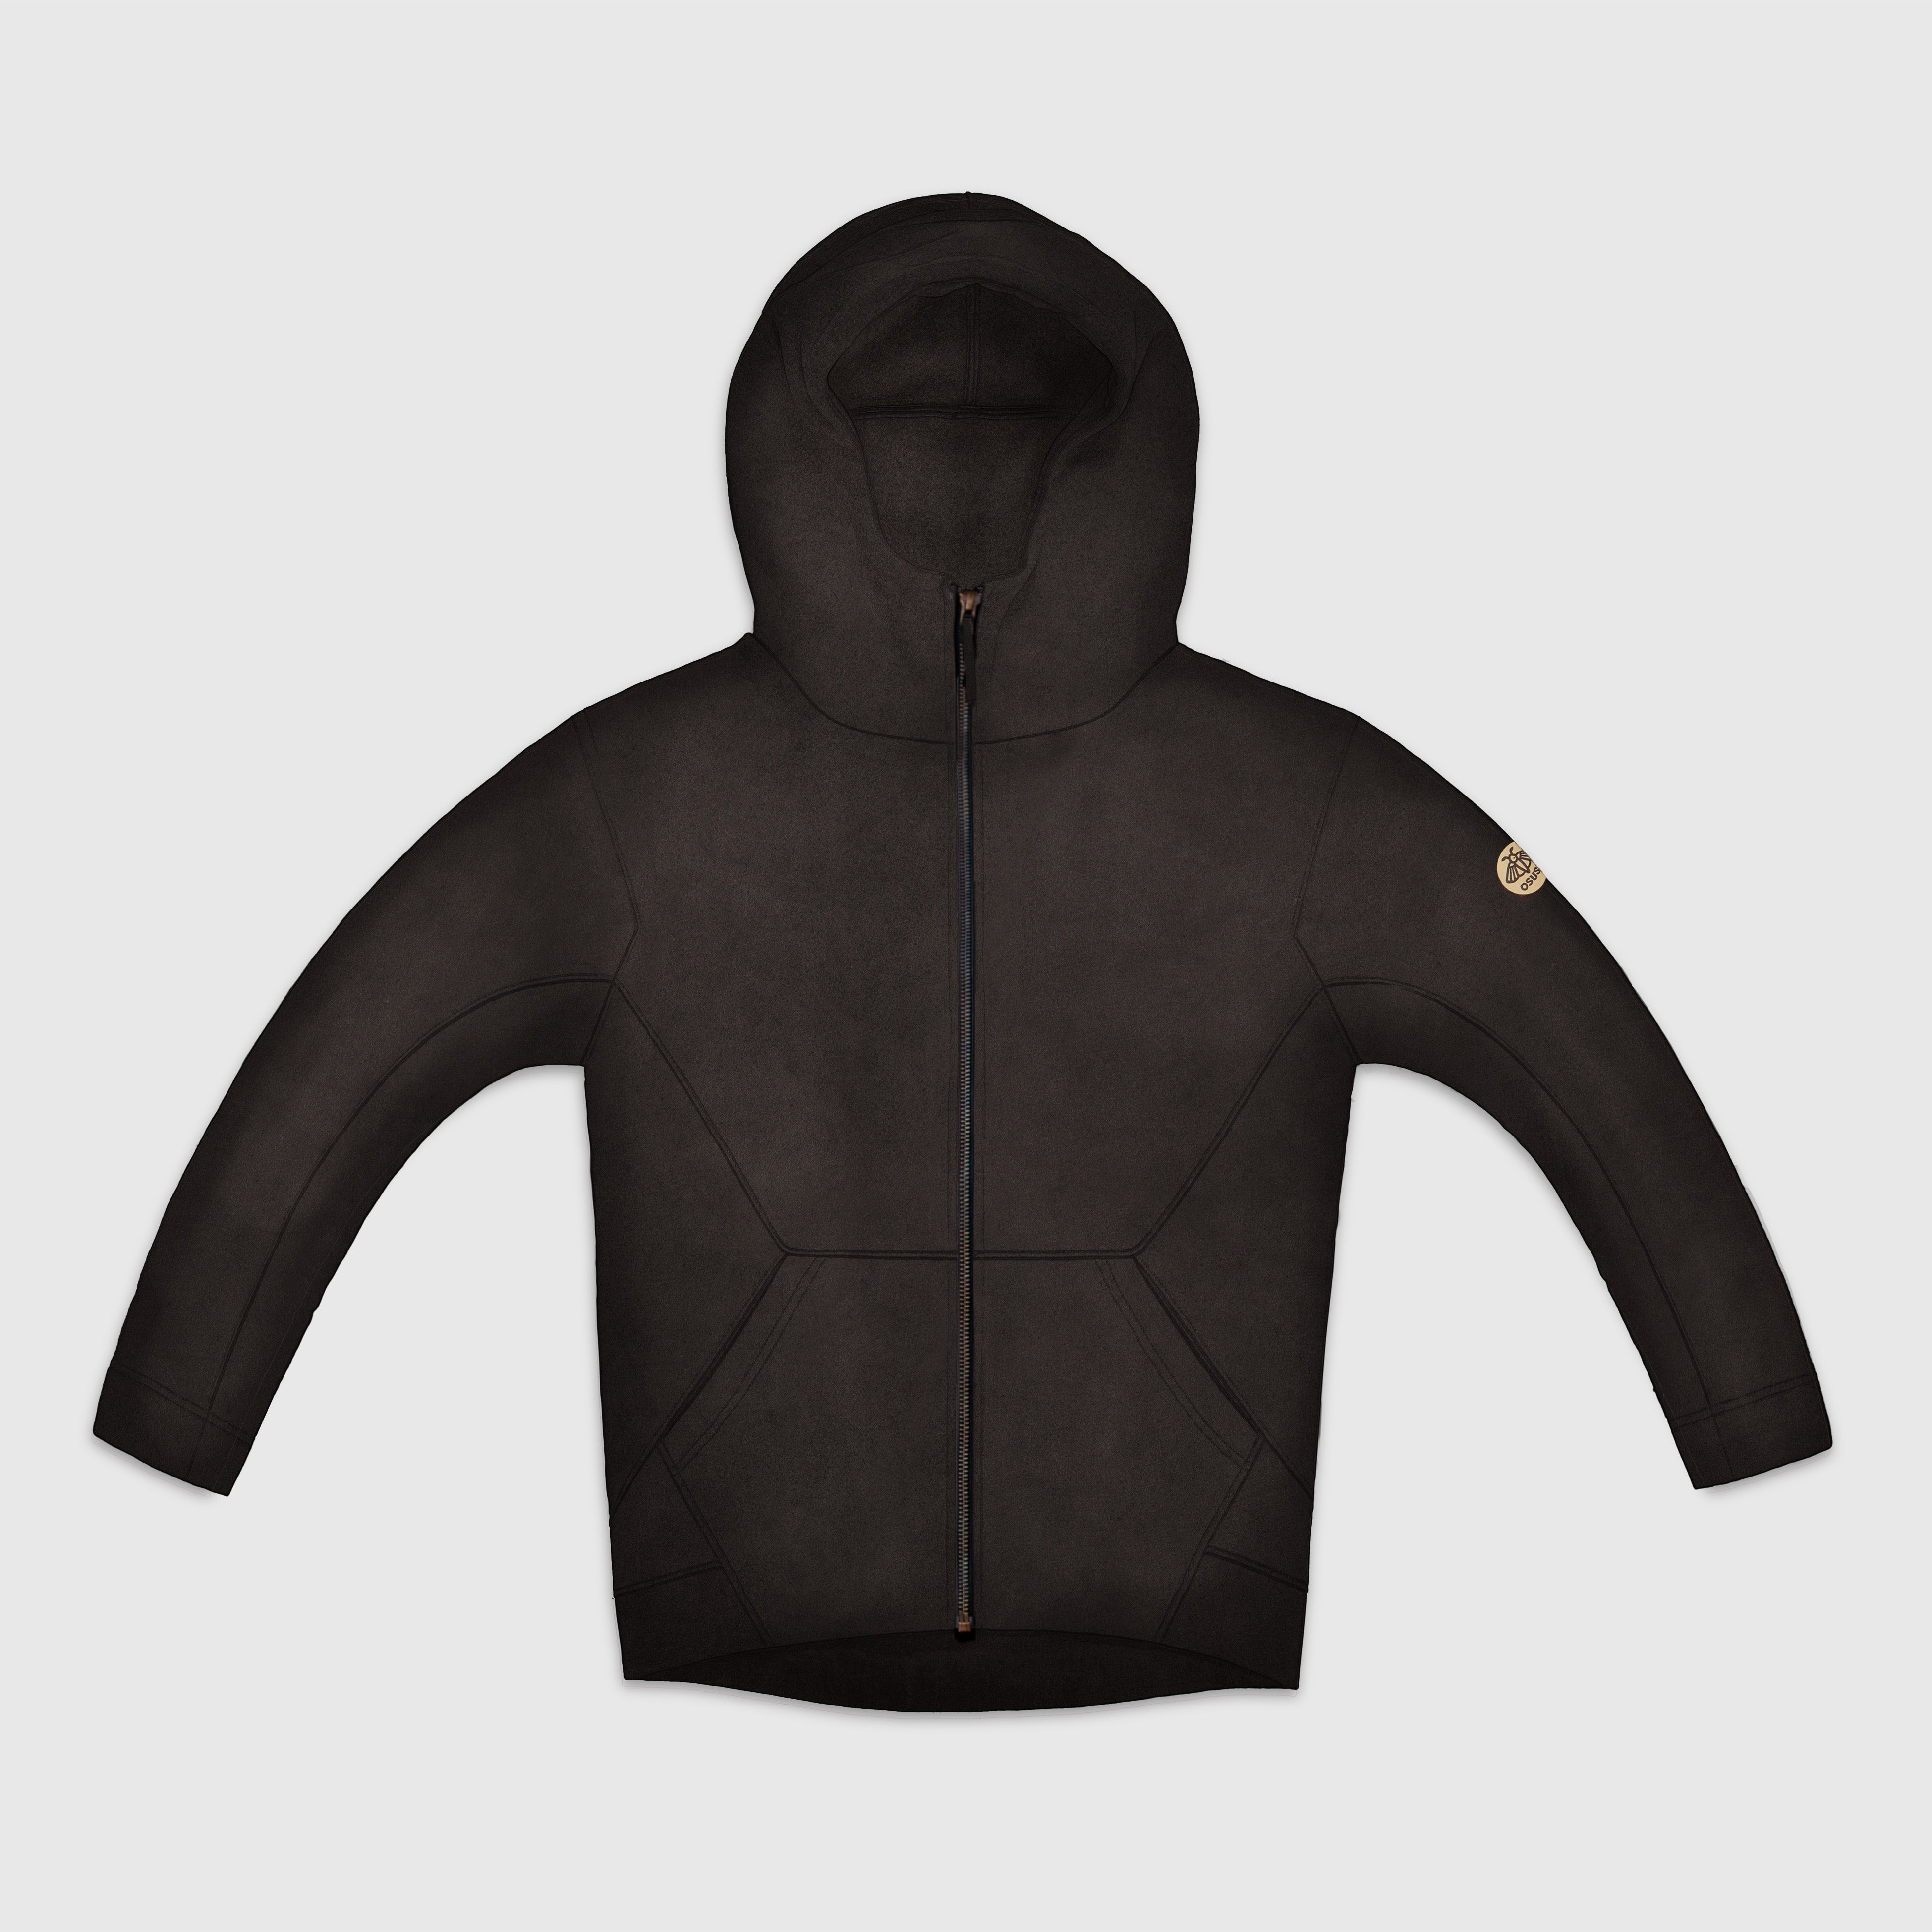 Amara – Fleece Full-Zip Hoodie in Black Wash